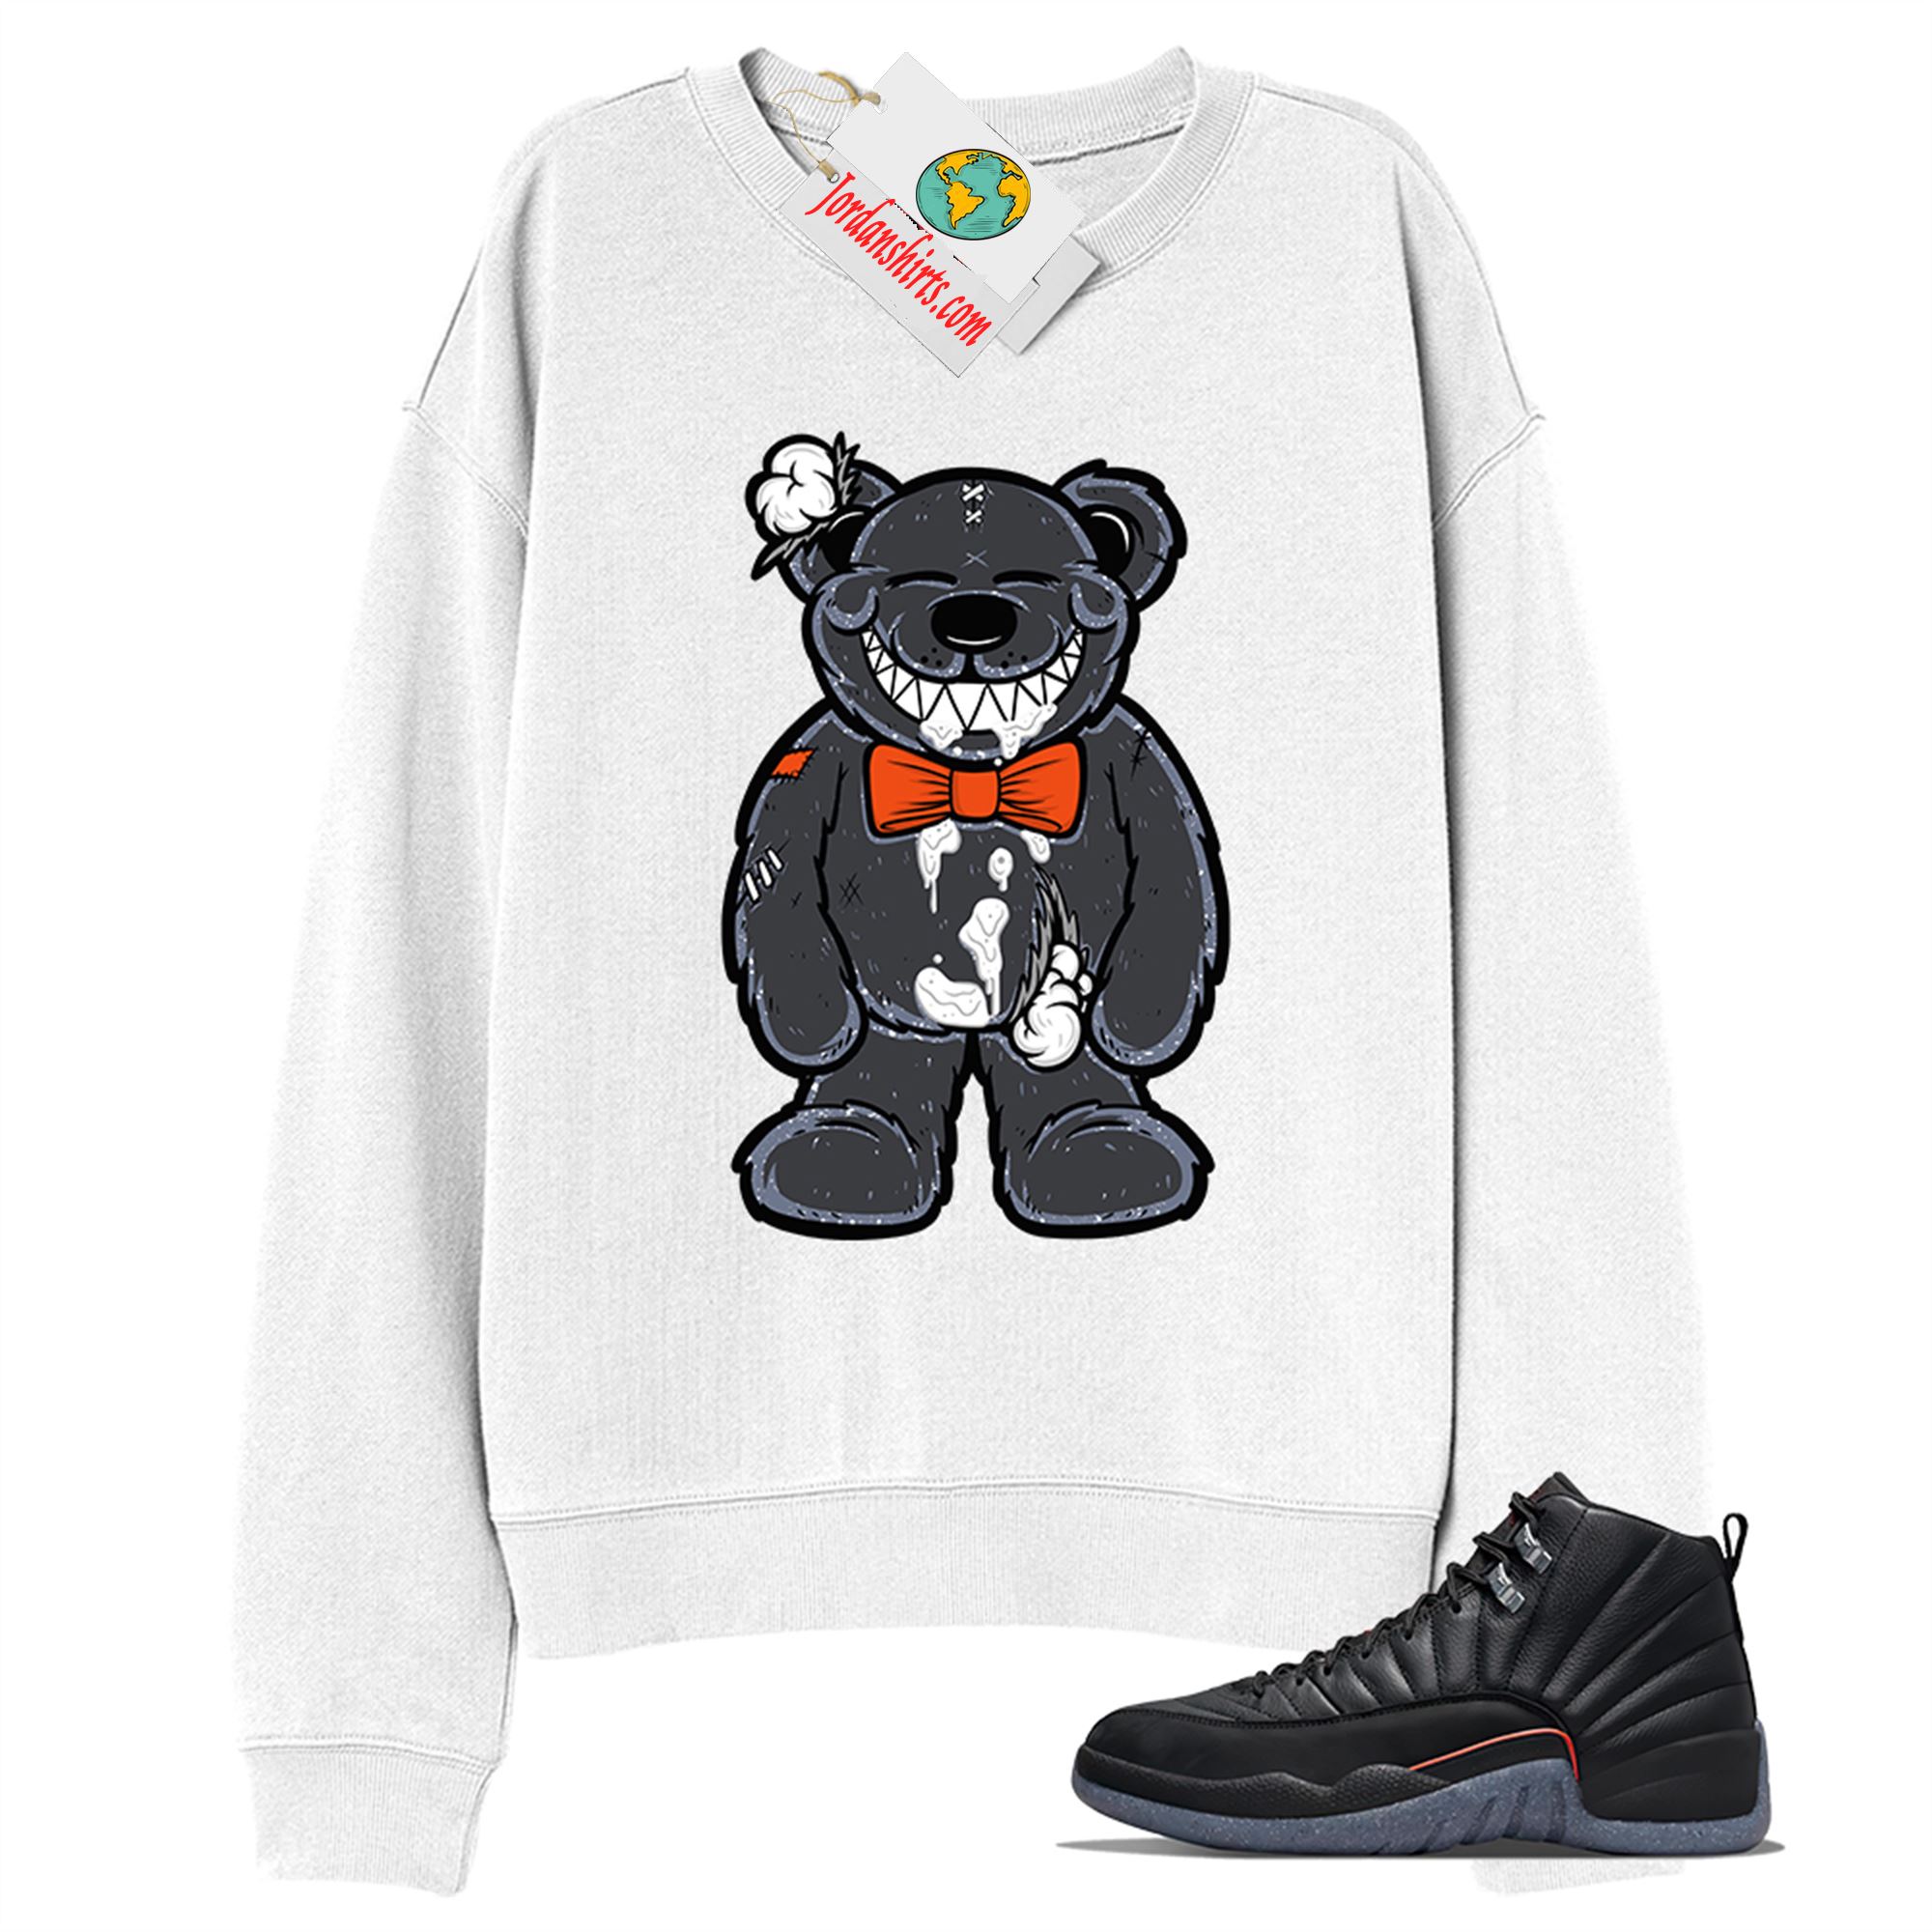 Jordan 12 Sweatshirt, Teddy Bear Smile White Sweatshirt Air Jordan 12 Utility Grind 12s Size Up To 5xl